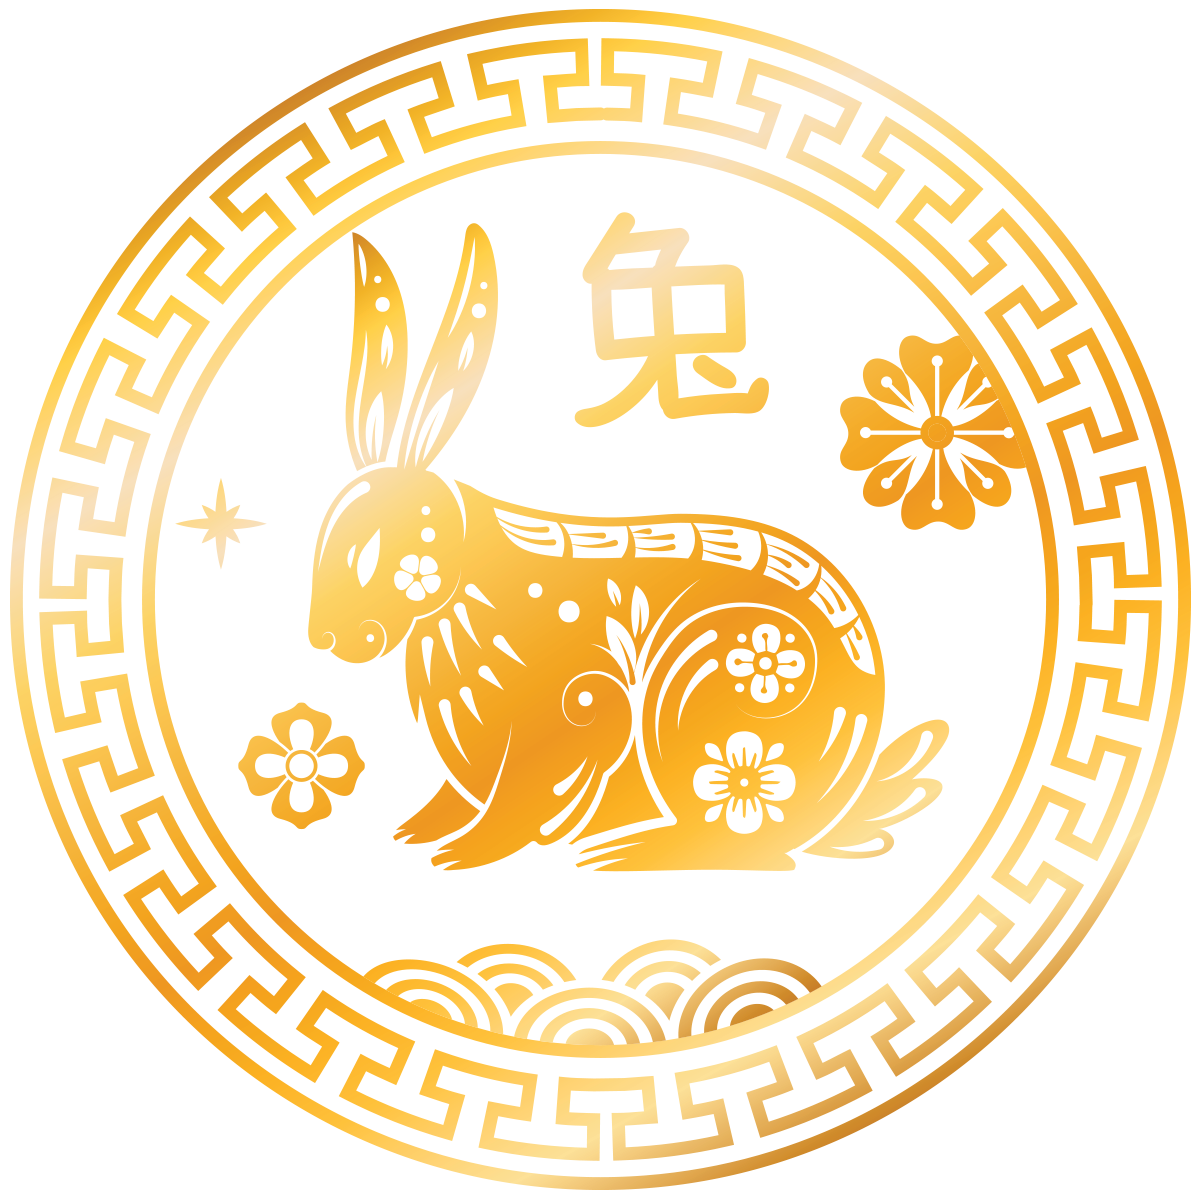 China Sichuan Horoscopes: The Rabbit